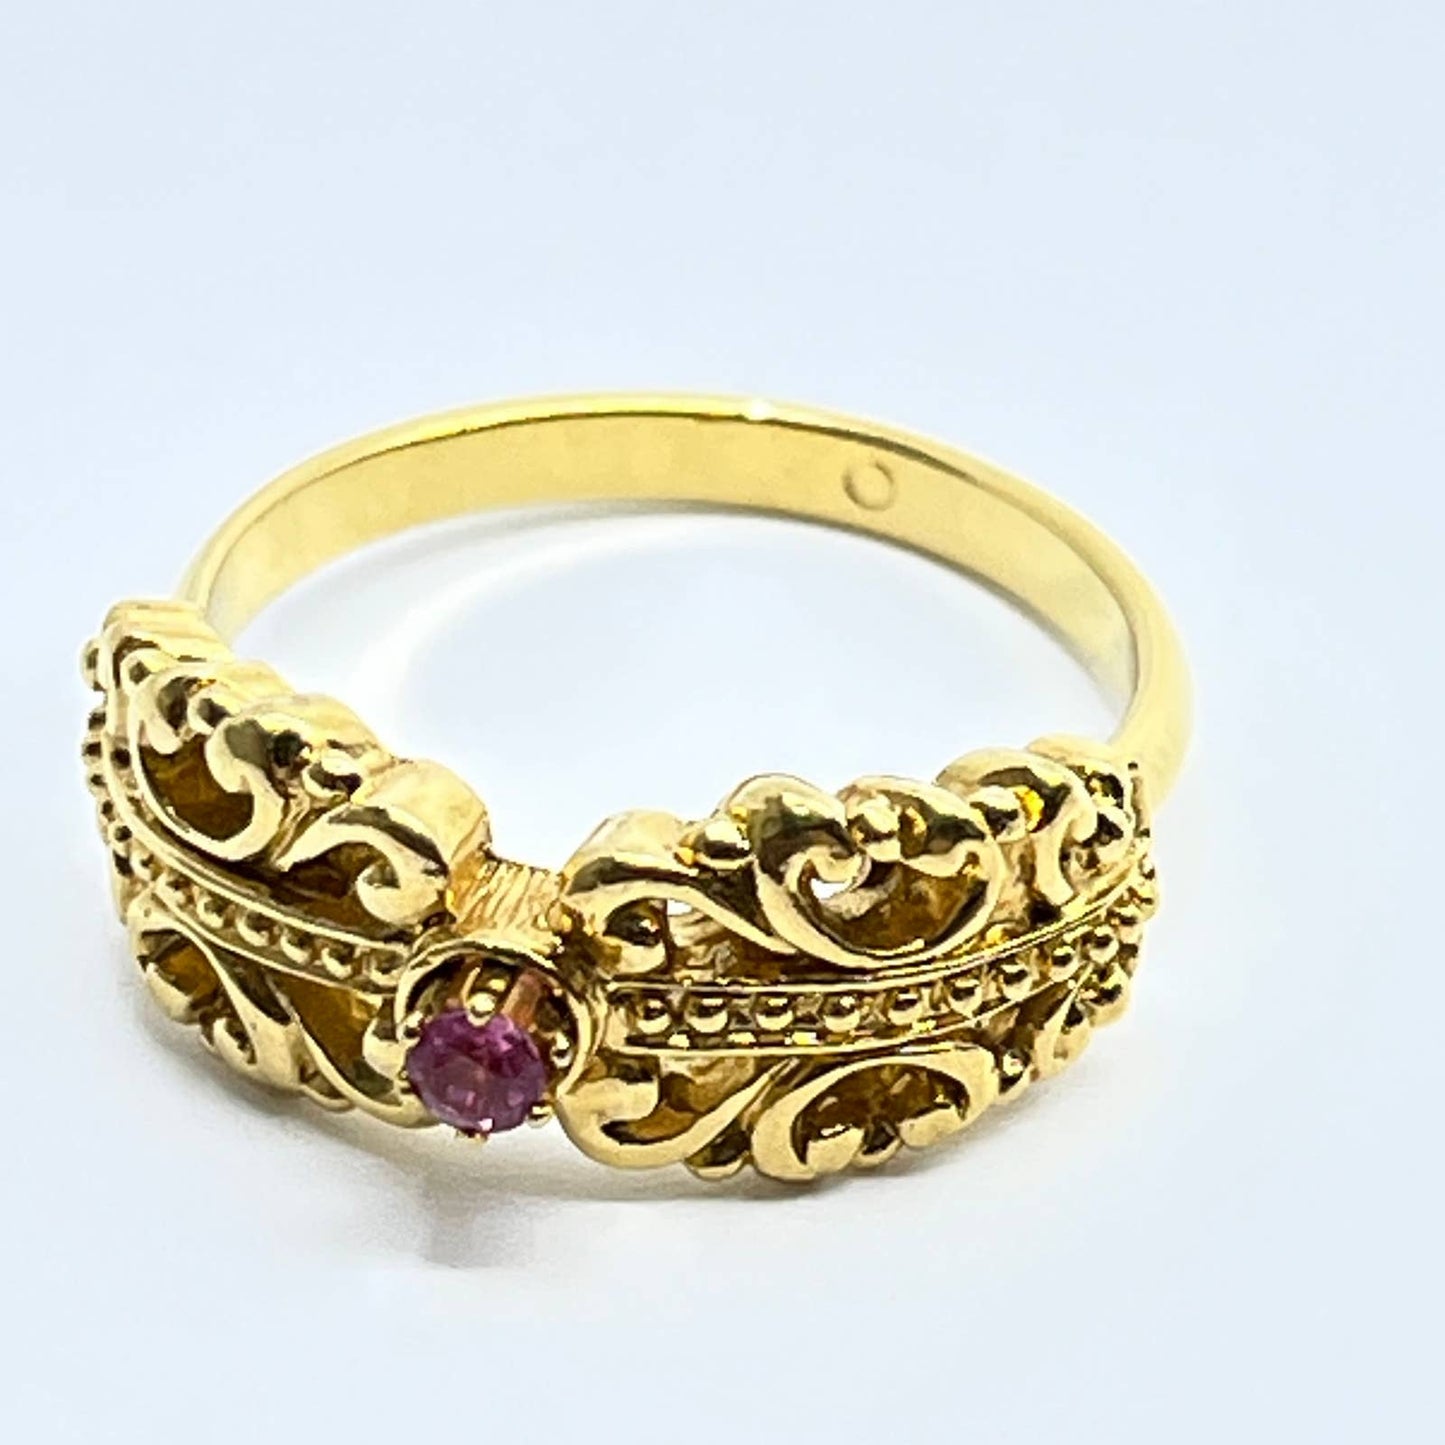 Victorian Edwardian Style Ladies Goldtone Pink Rhinestone Ring Size 8-9 SD5